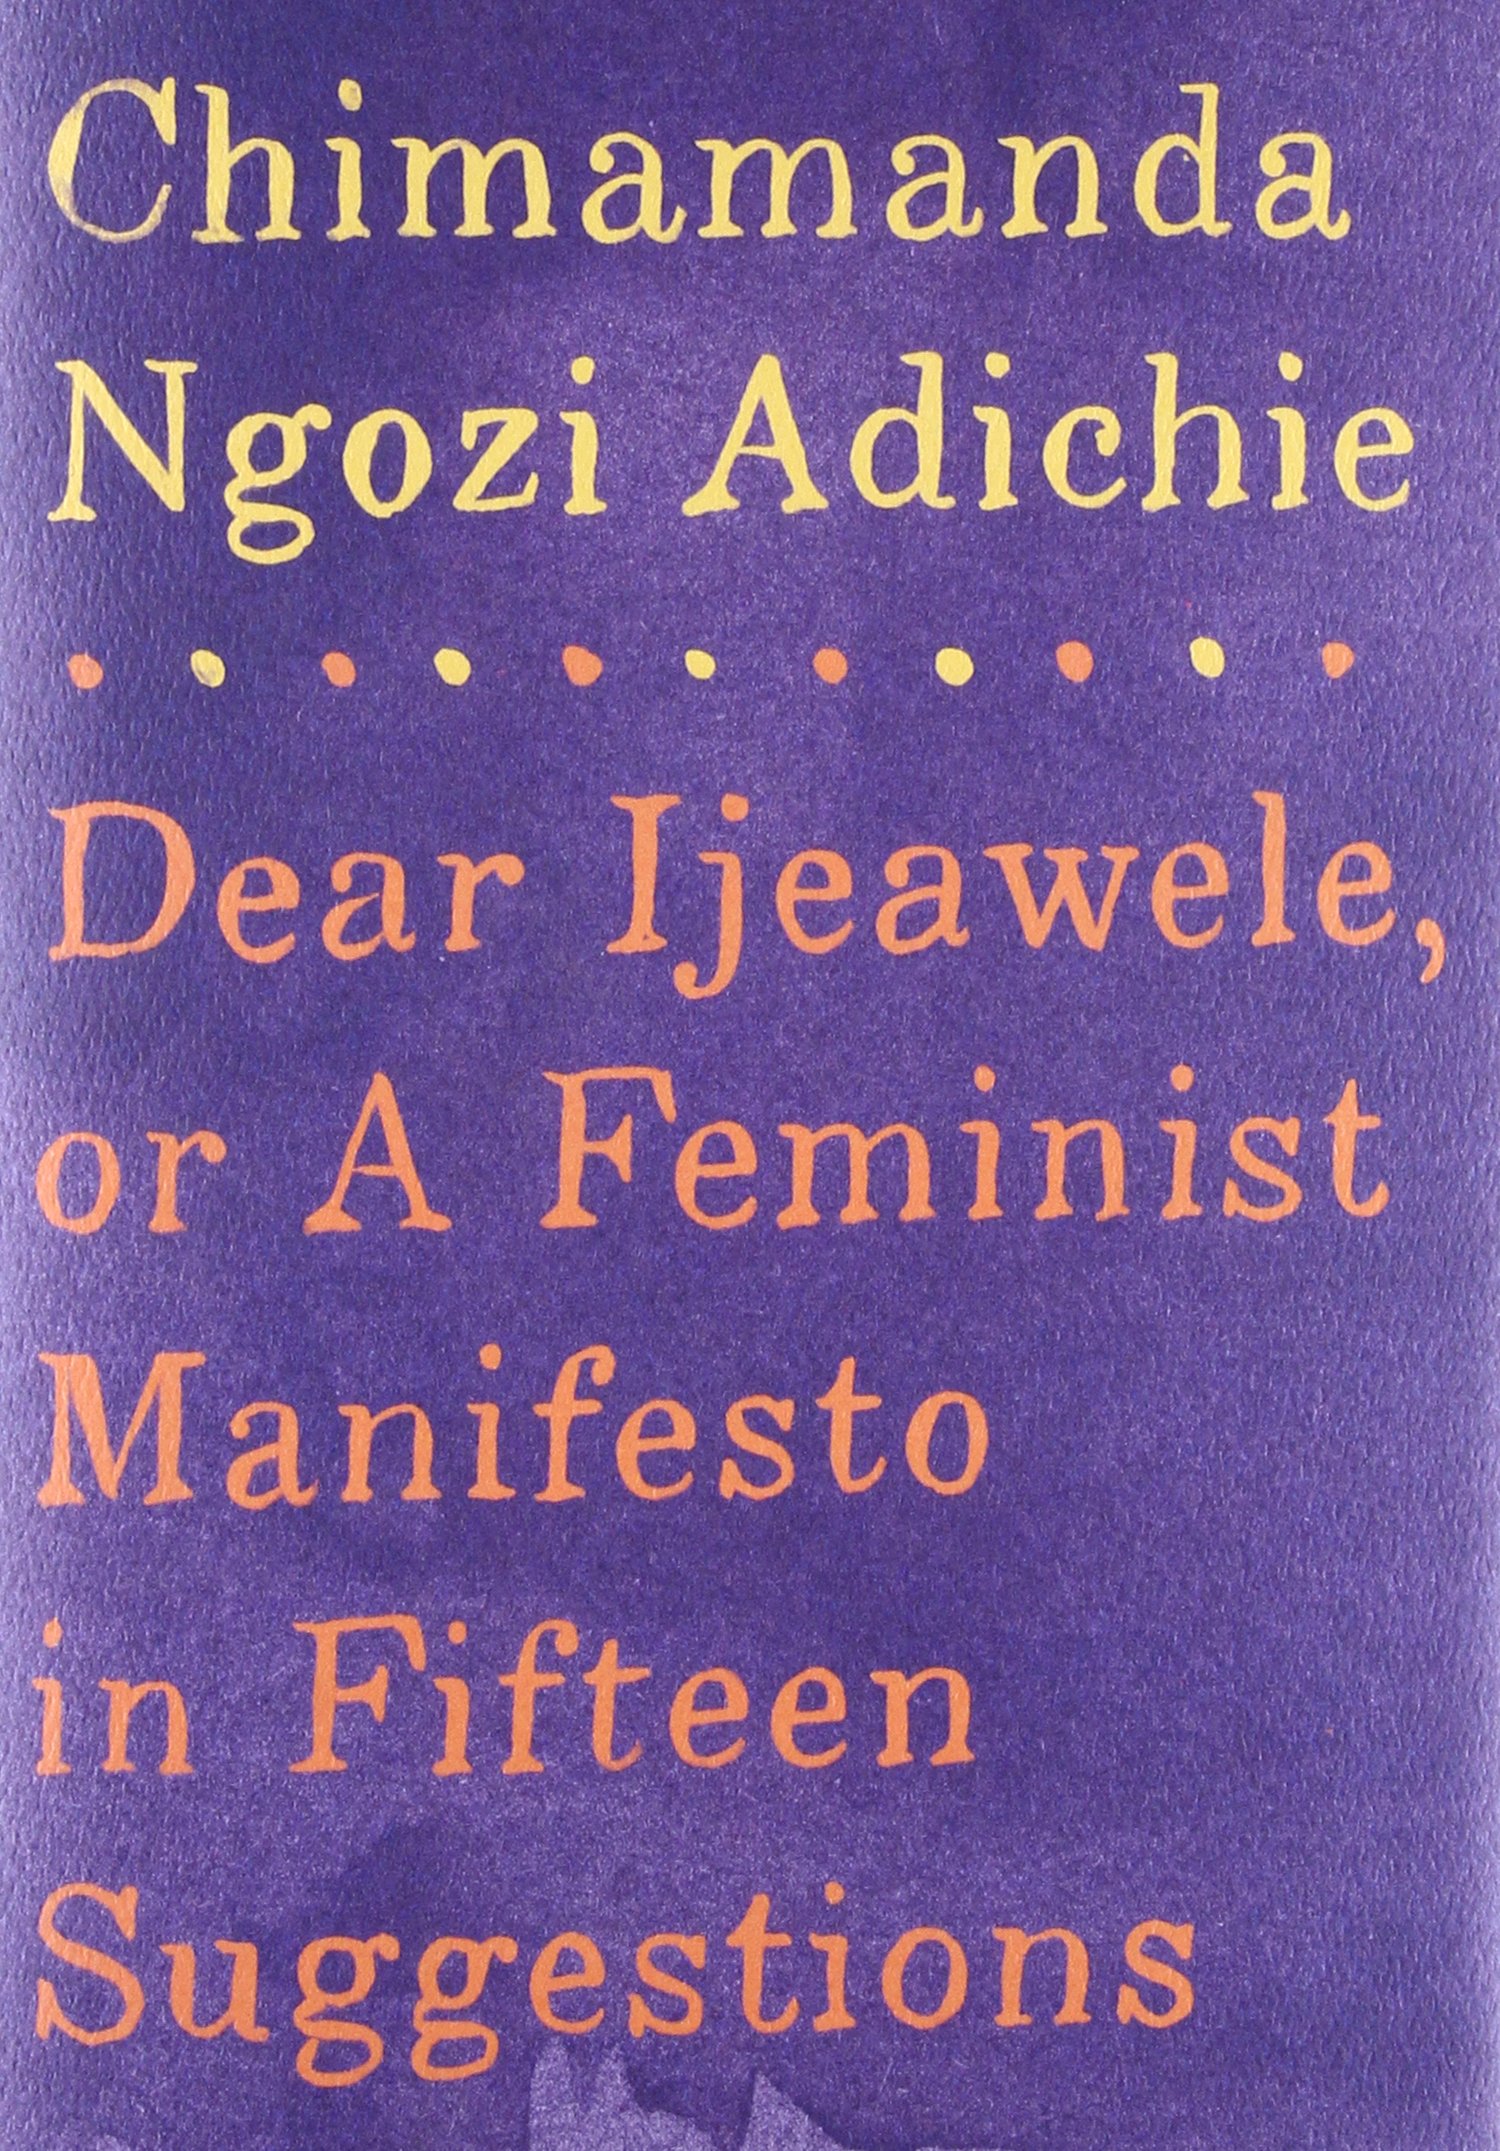 Favorite things gift idea | A Feminist Manifesto in 15 Suggestions by Chimamanda Ngozi Adichie